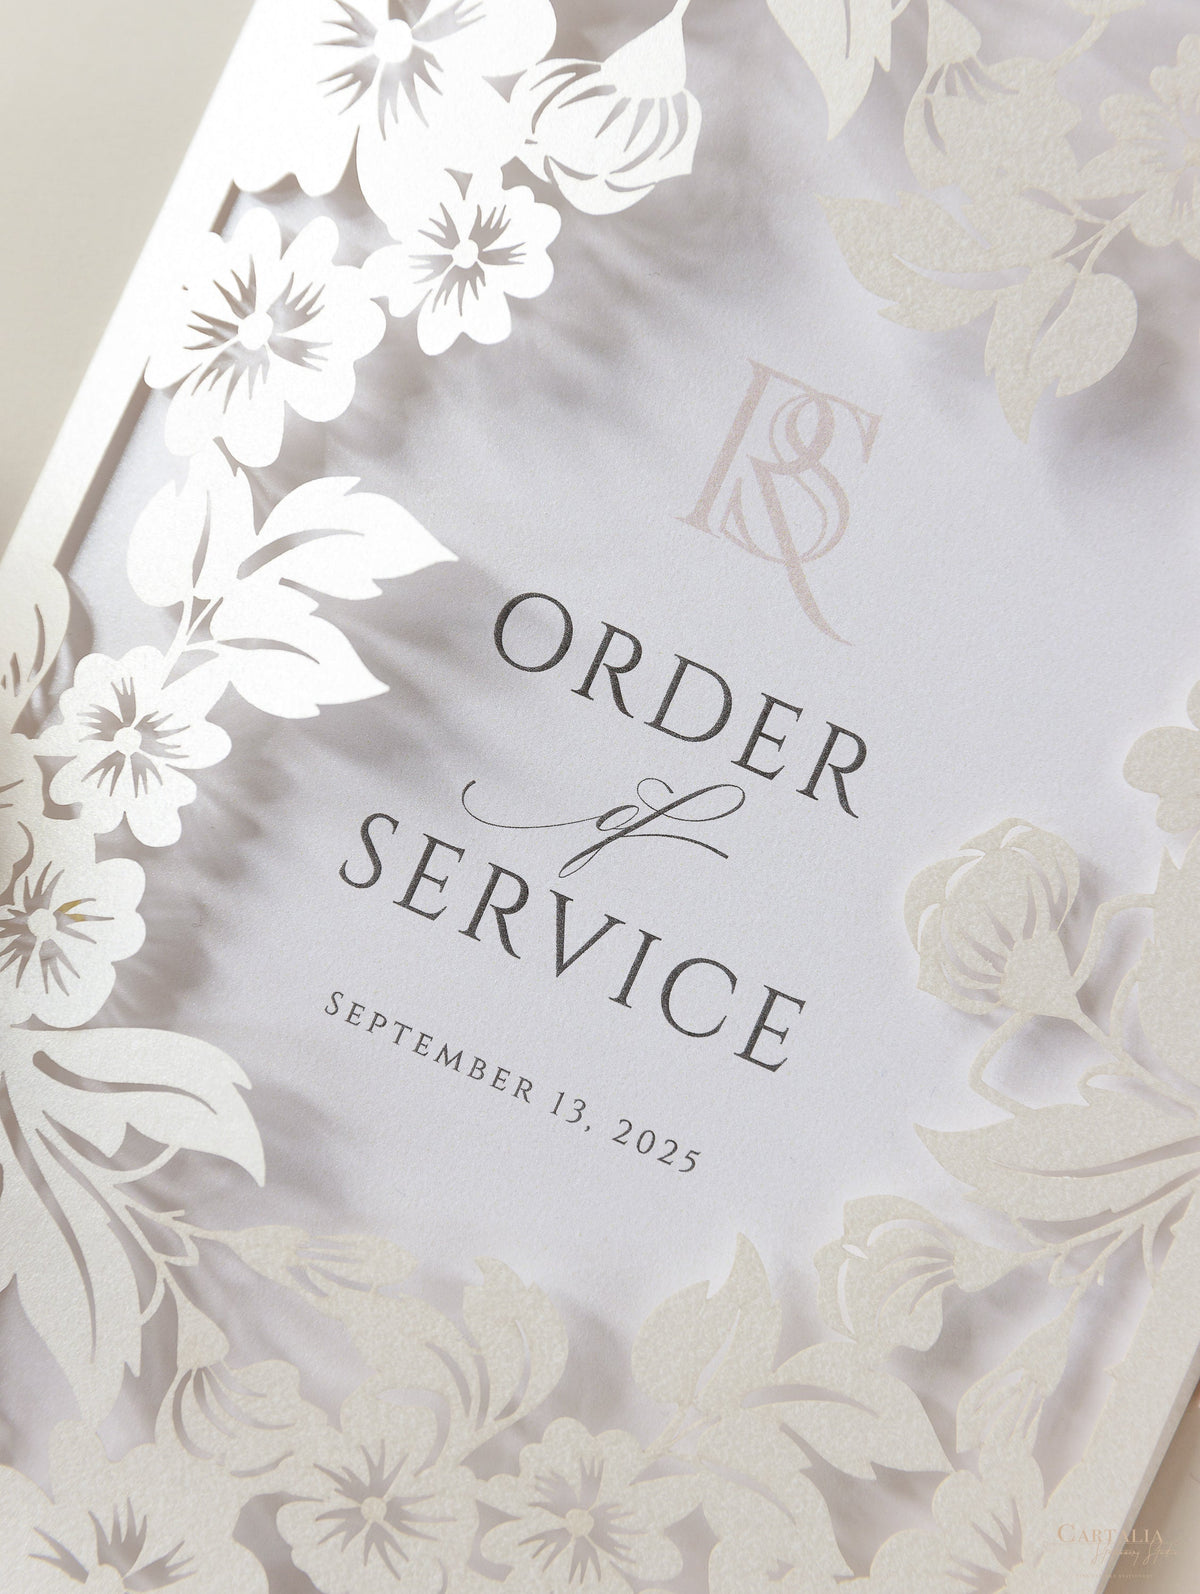 Romántico detalle floral cortado con láser Orden de servicio